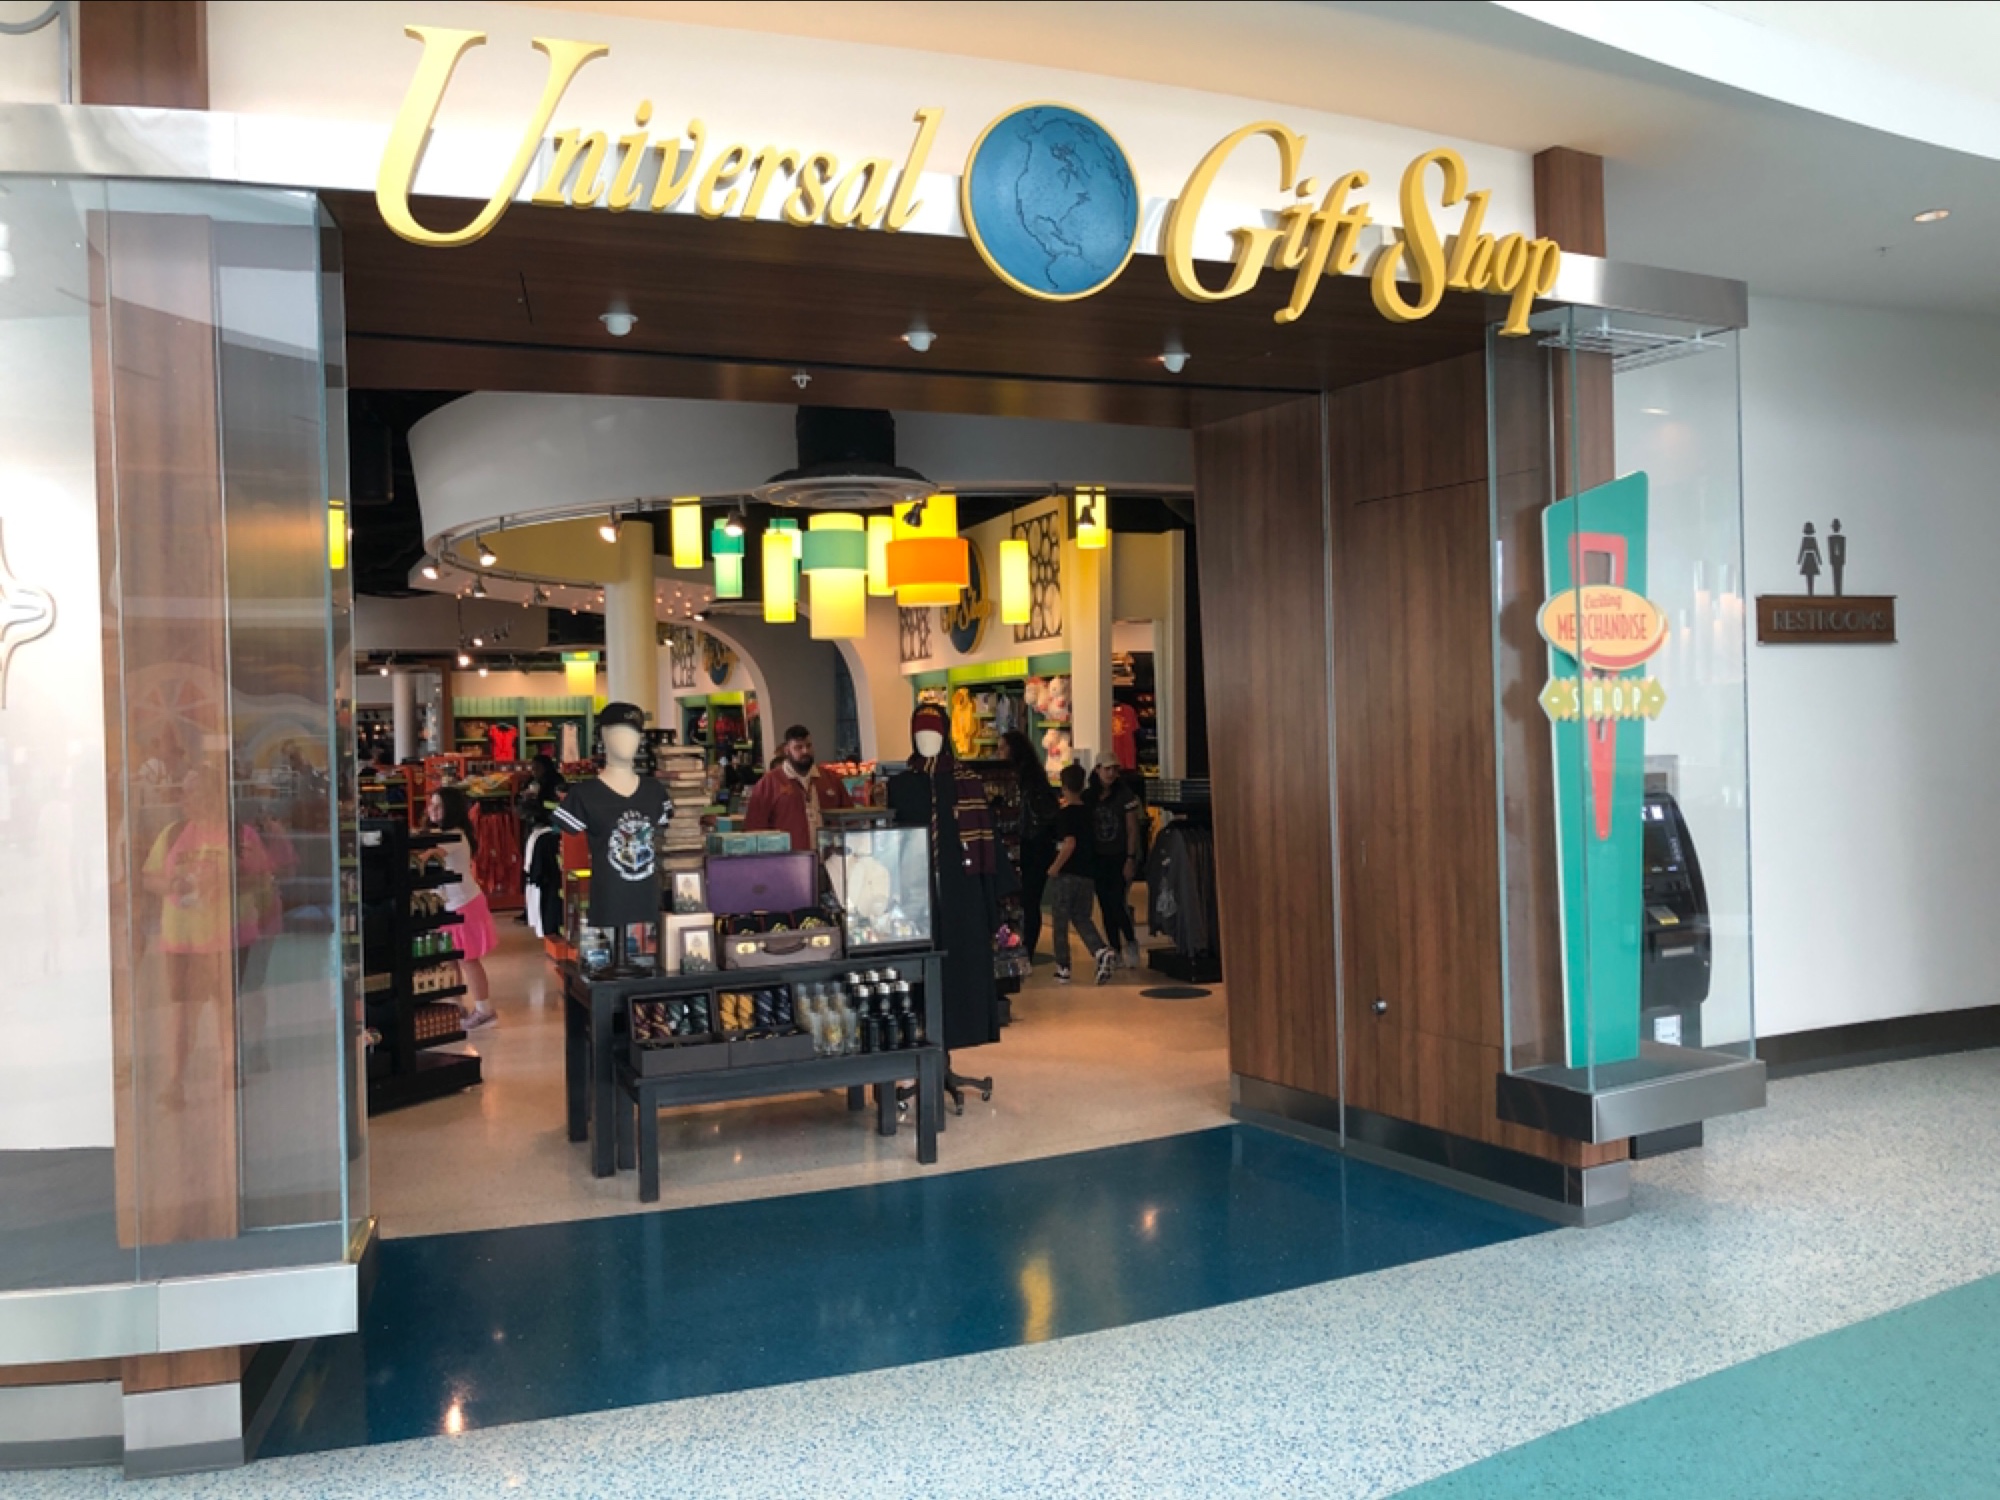 Universal Gift Shop